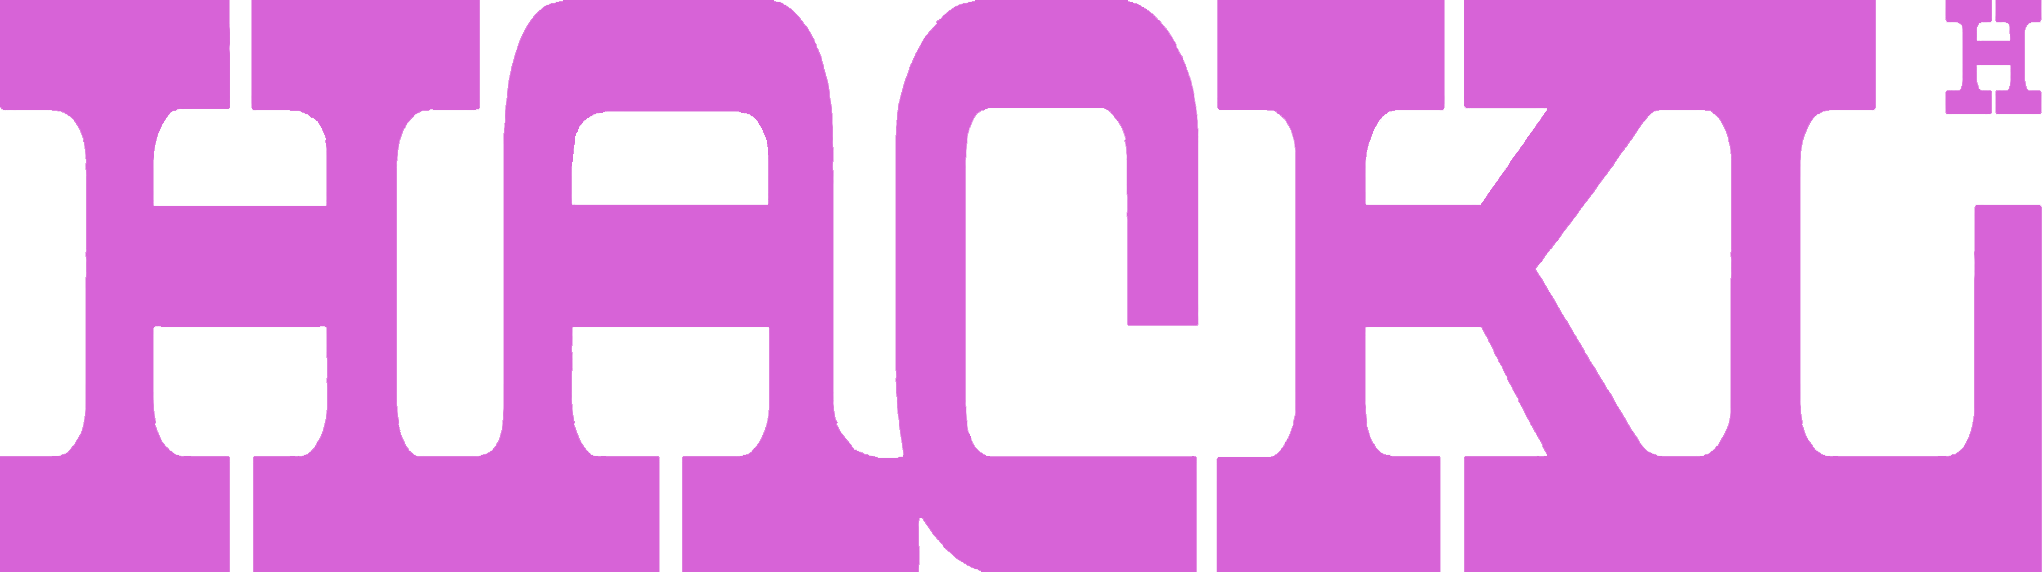 Hackl Logo